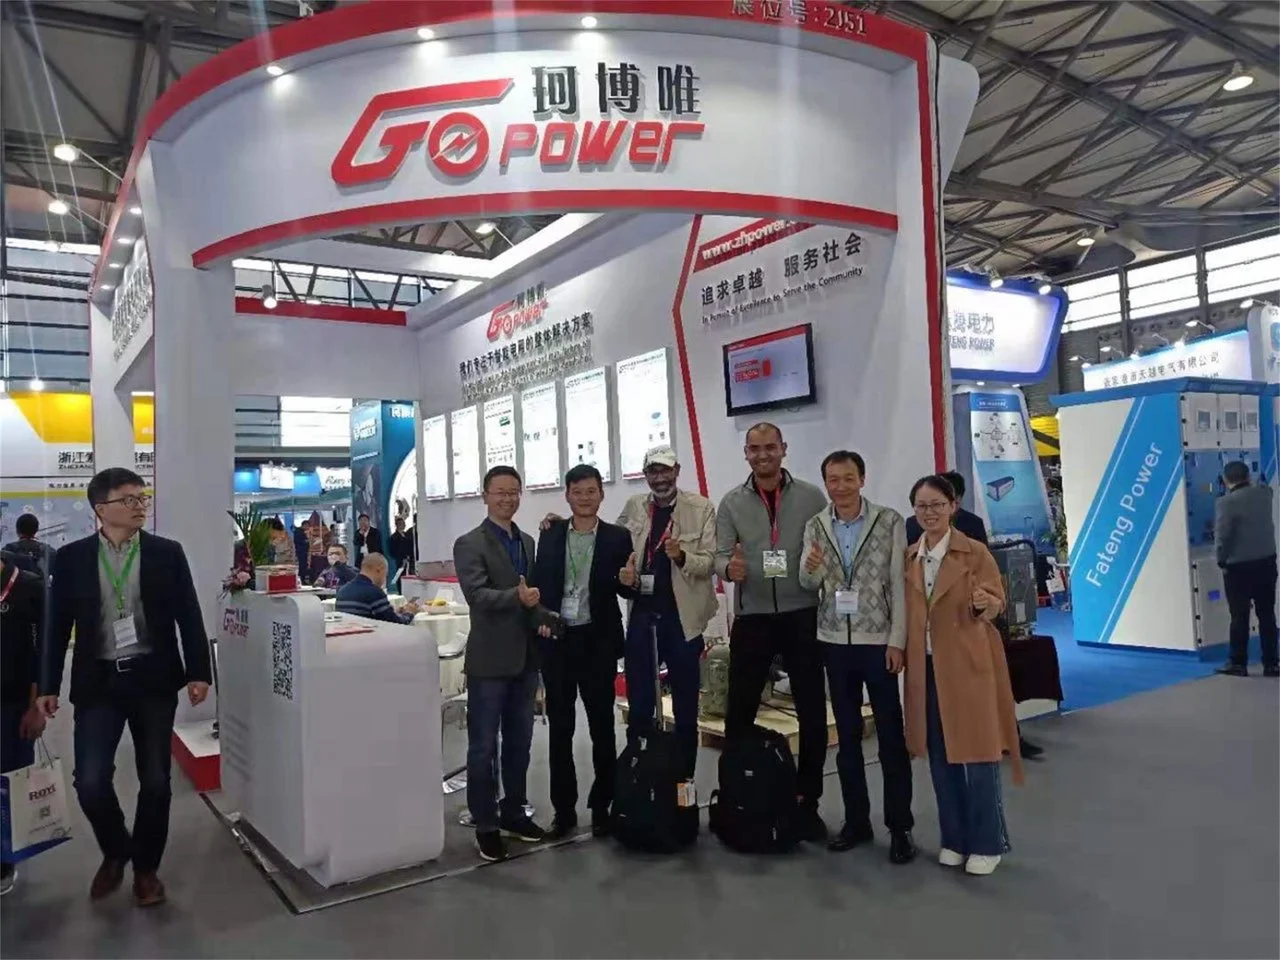 Die 12. Shanghai Internat ional Power Equipment and Technology Exhibition